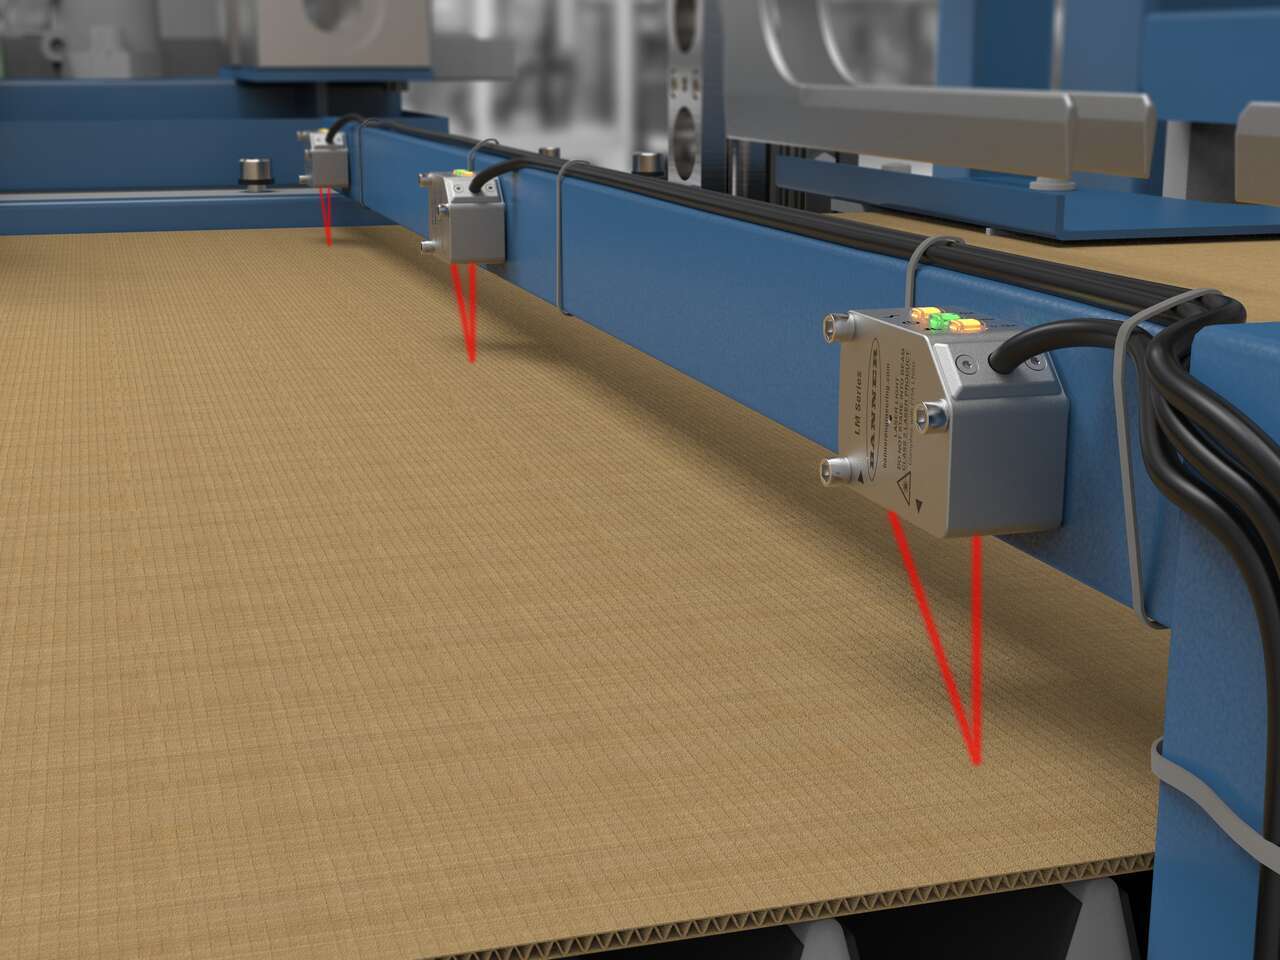 LM precision measurement sensor monitors cardboard thickness